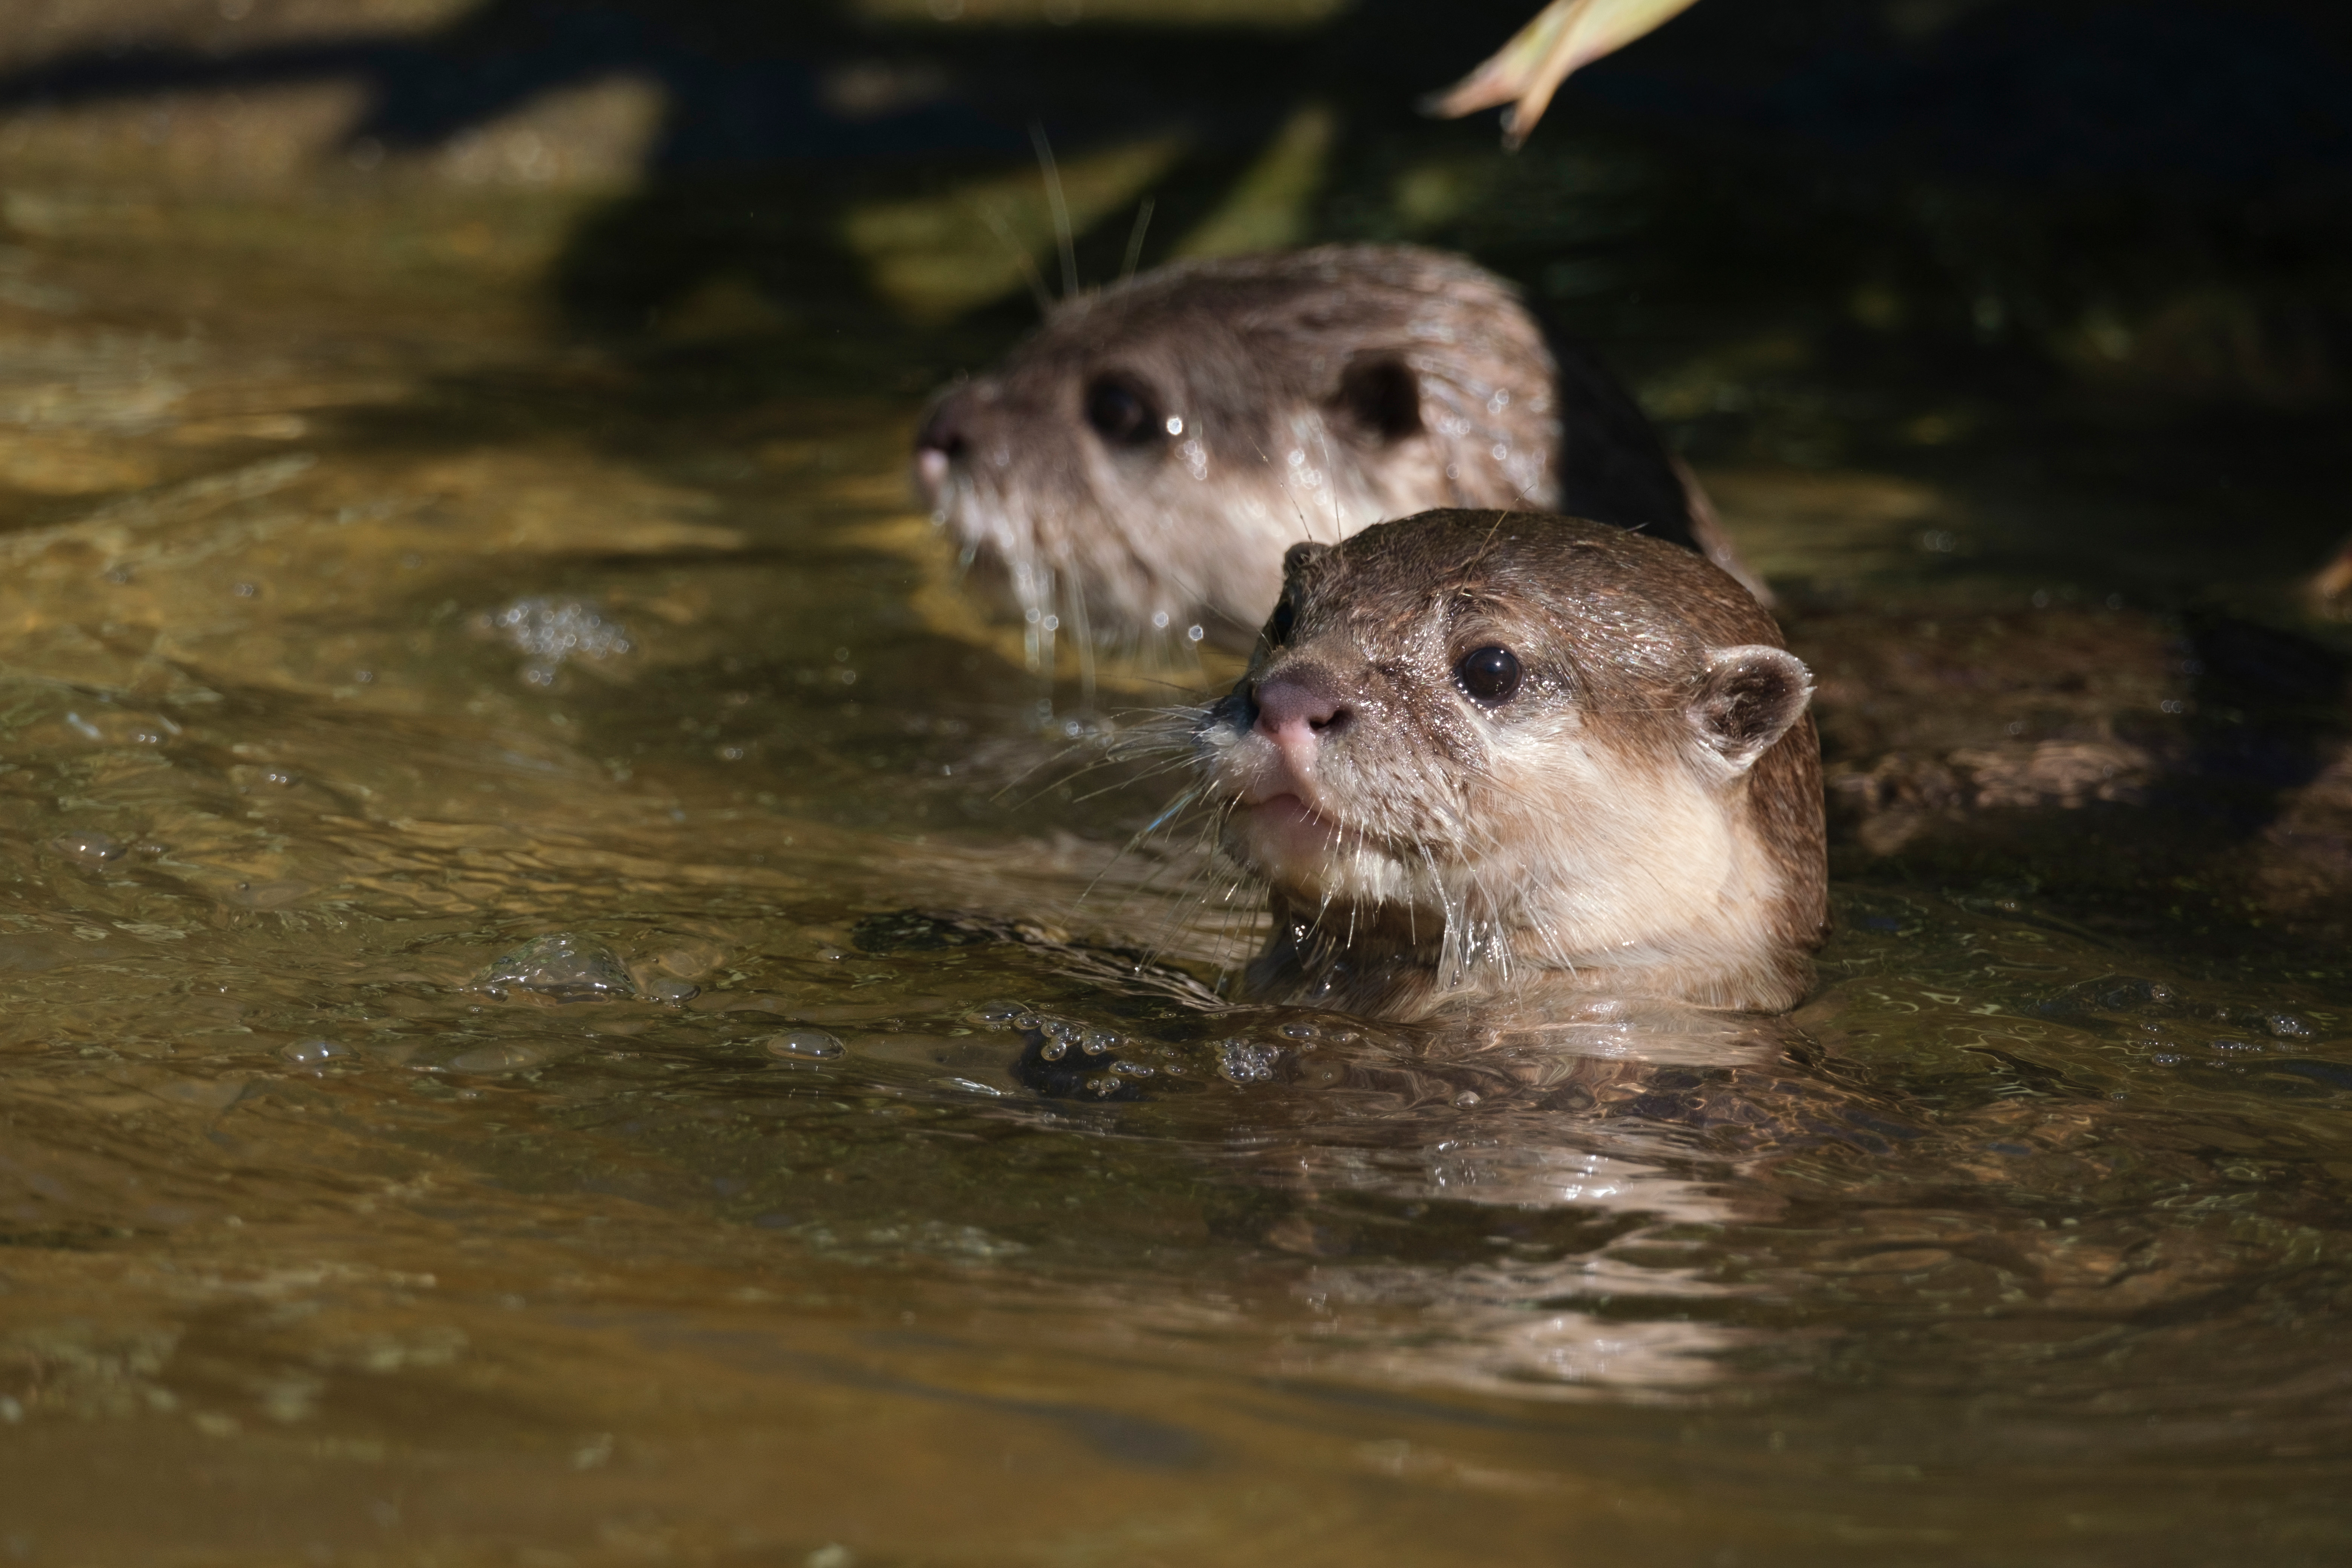 Otters, photo (C) Angela Nicholson, X-S10, 1/800s, f/7.1, ISO400, 451mm (677mm equivalent)